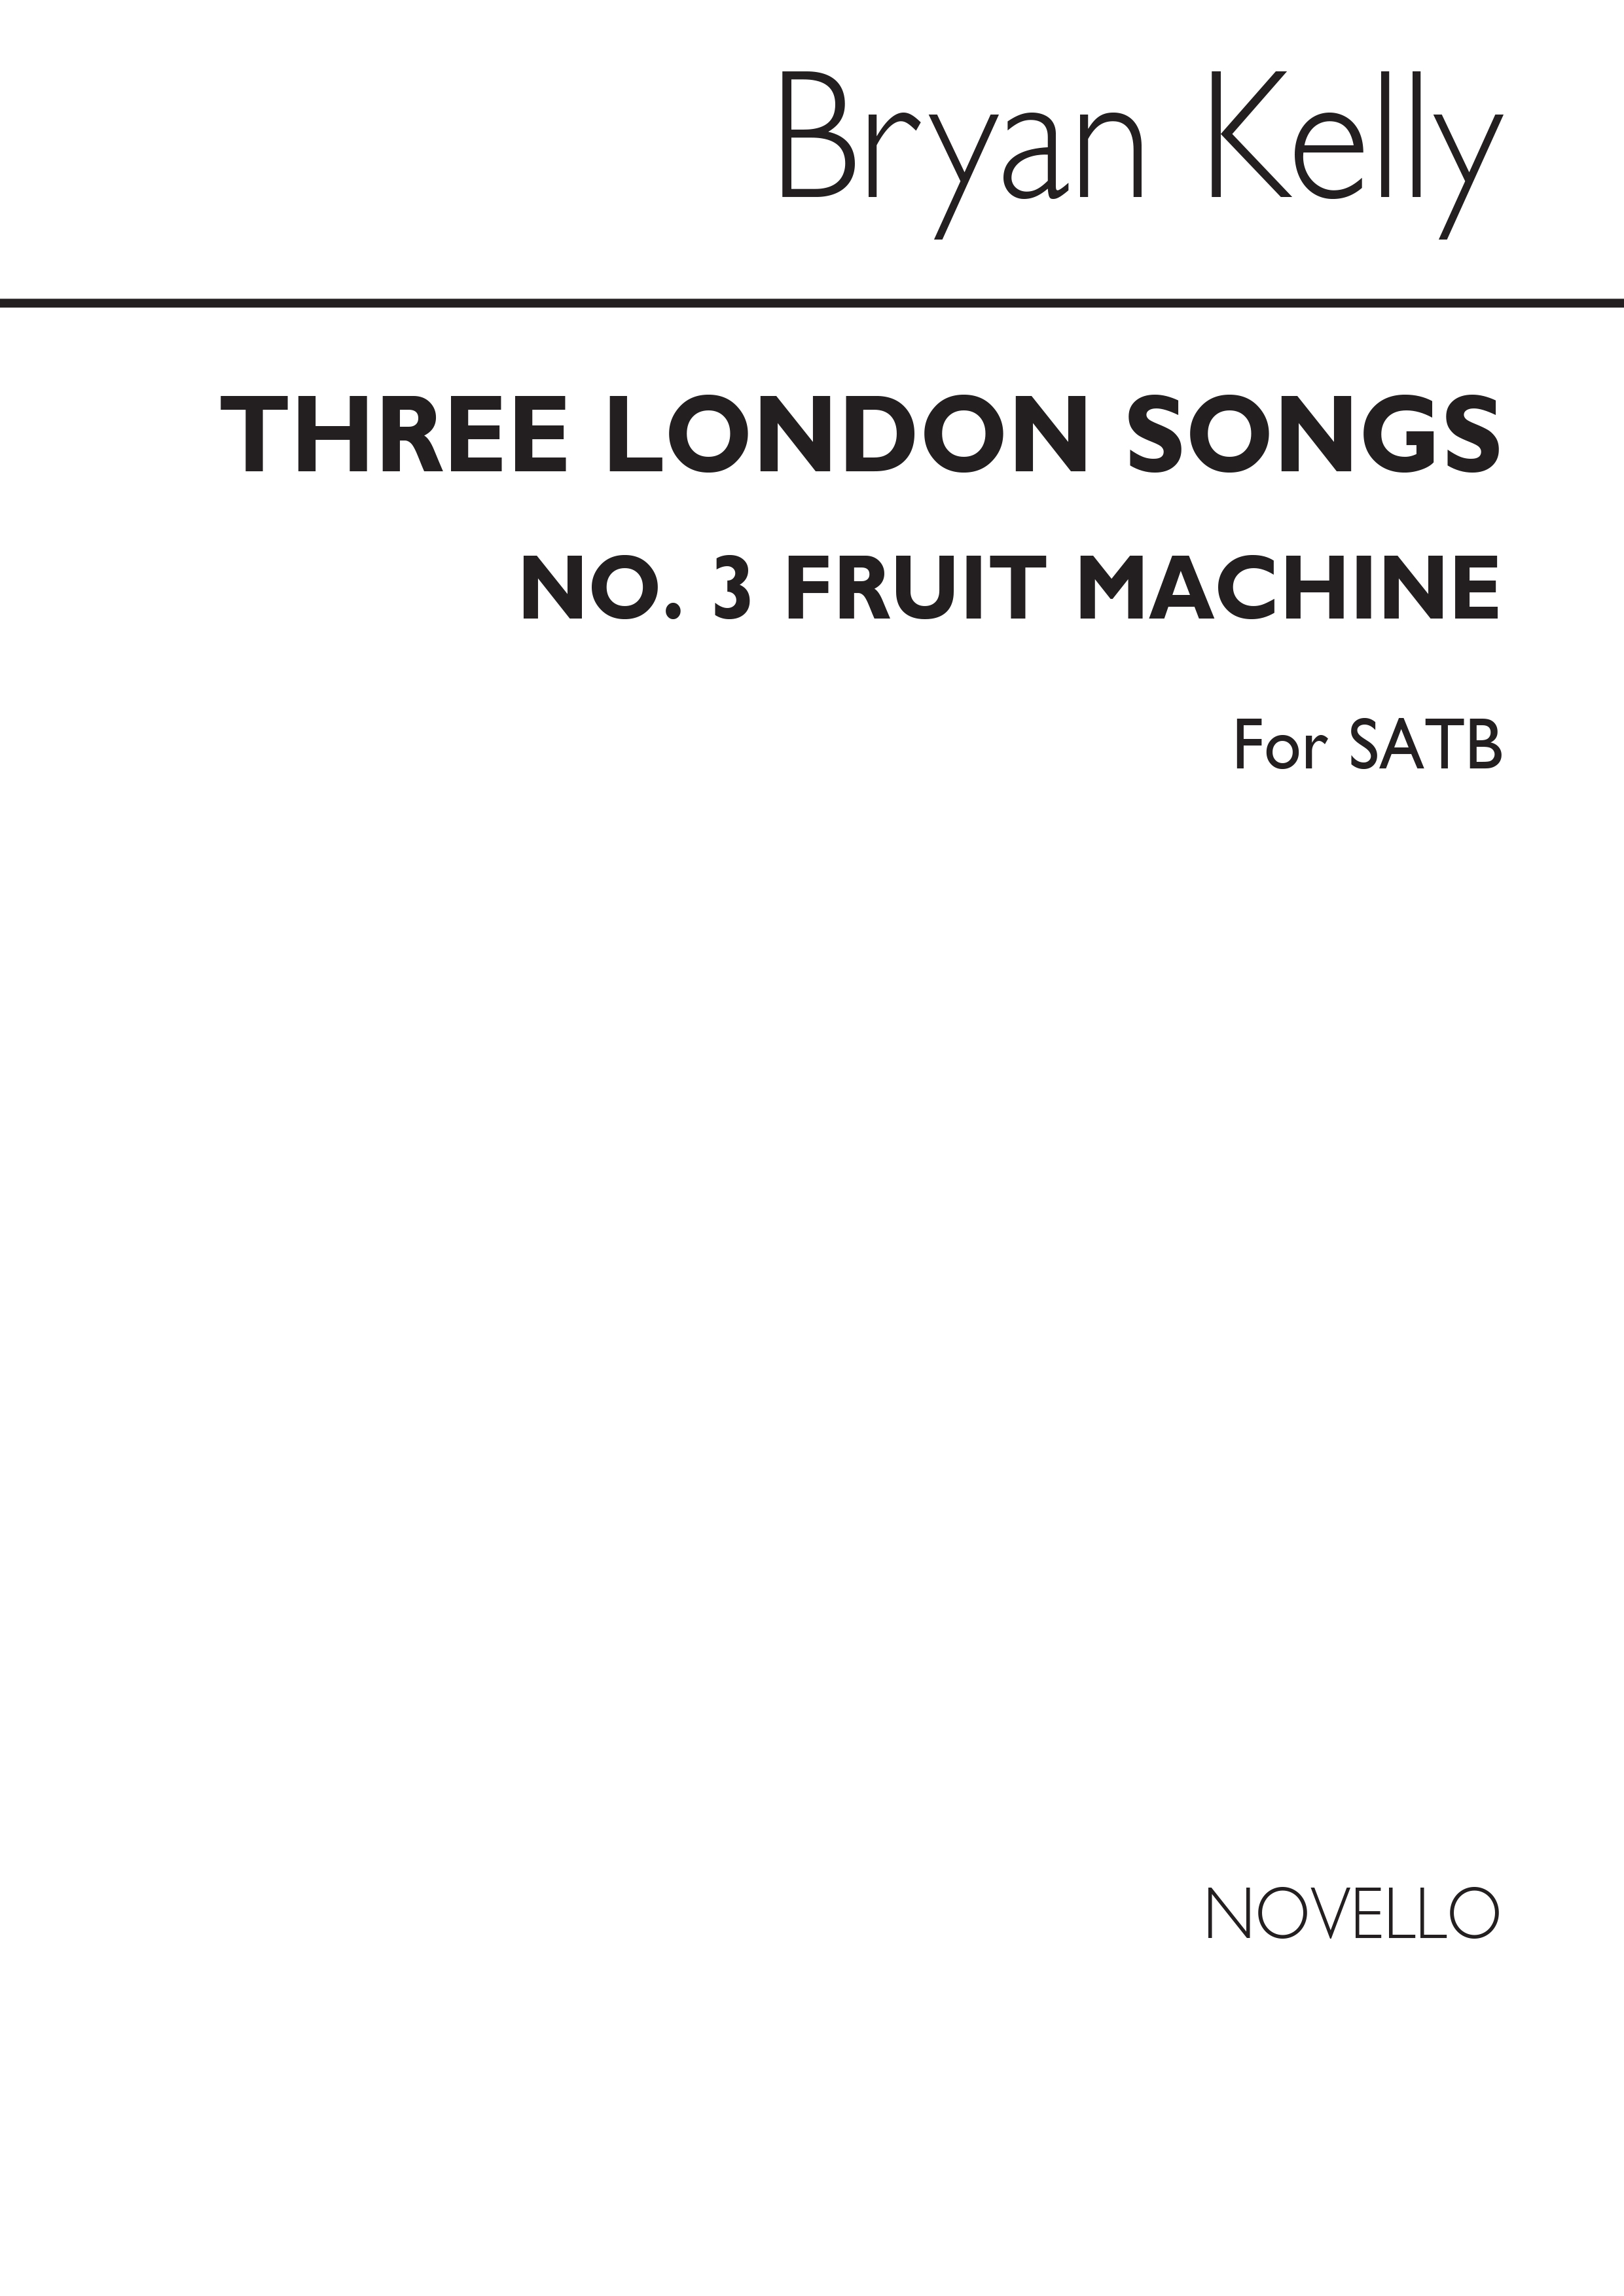 Bryan Kelly: Three London Songs No. 3 Fruit Machine